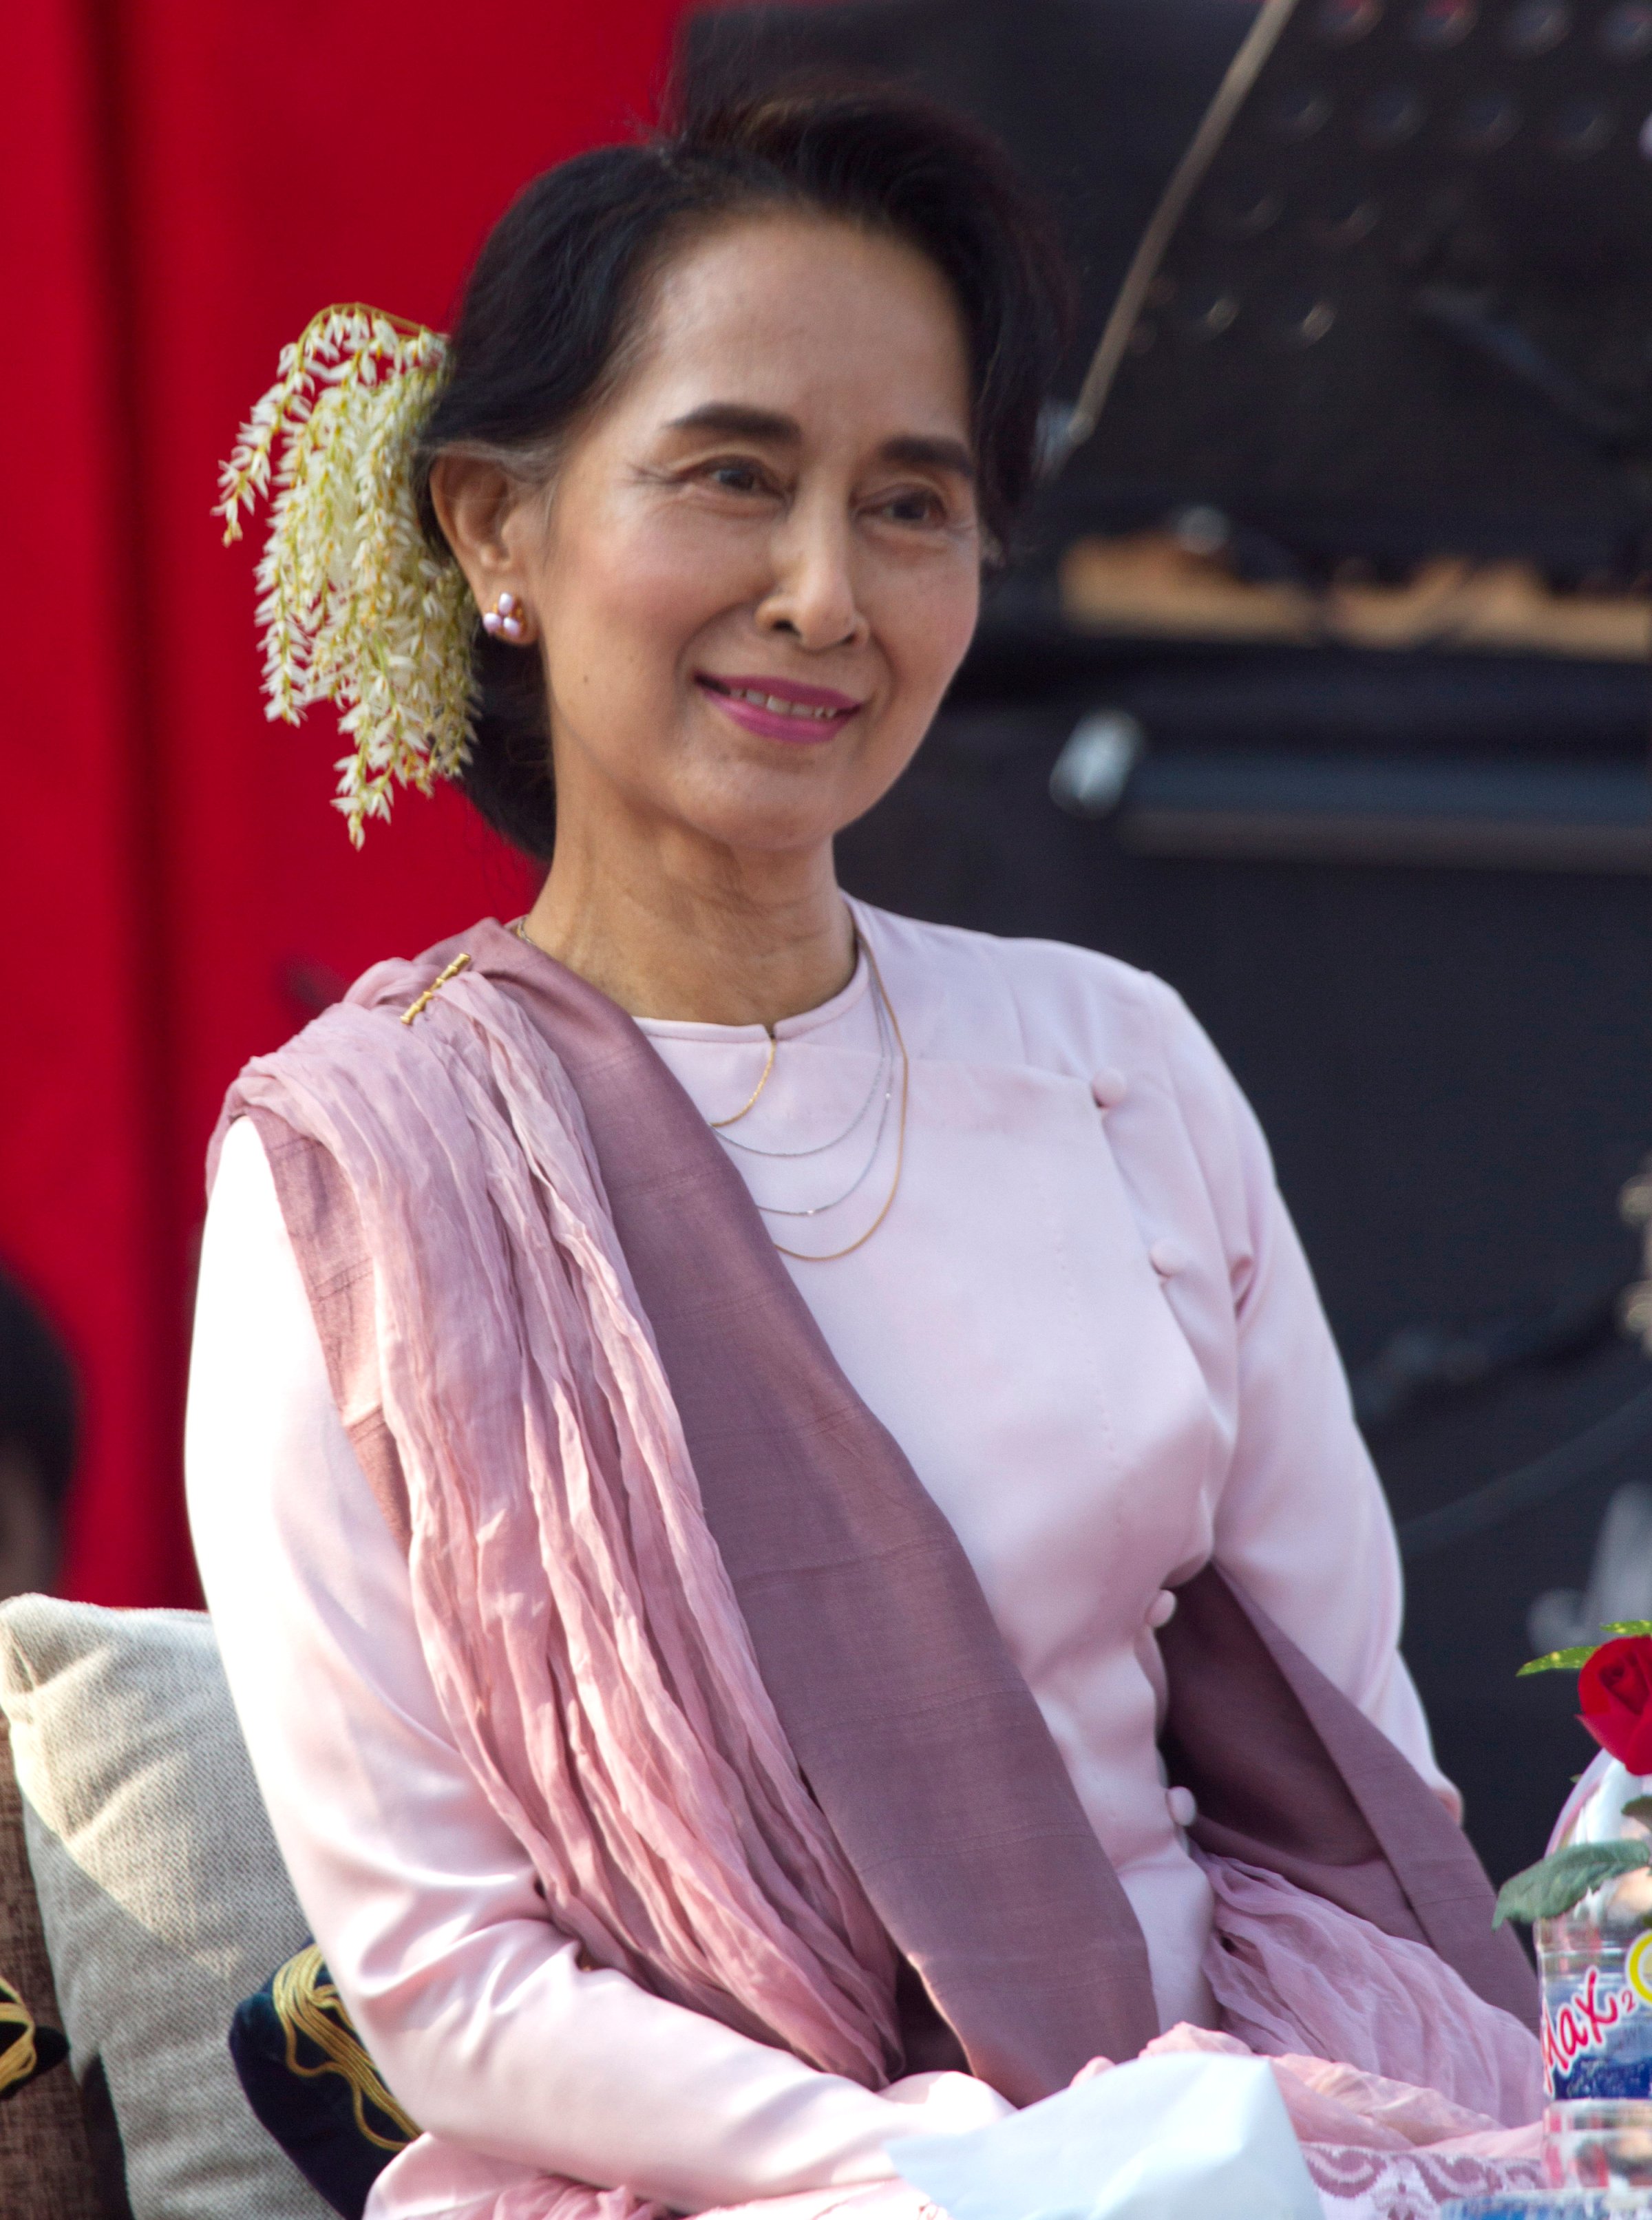 Aung San Suu Kyi attends an event in Yangon, Myanmar on Jan. 10, 2015.